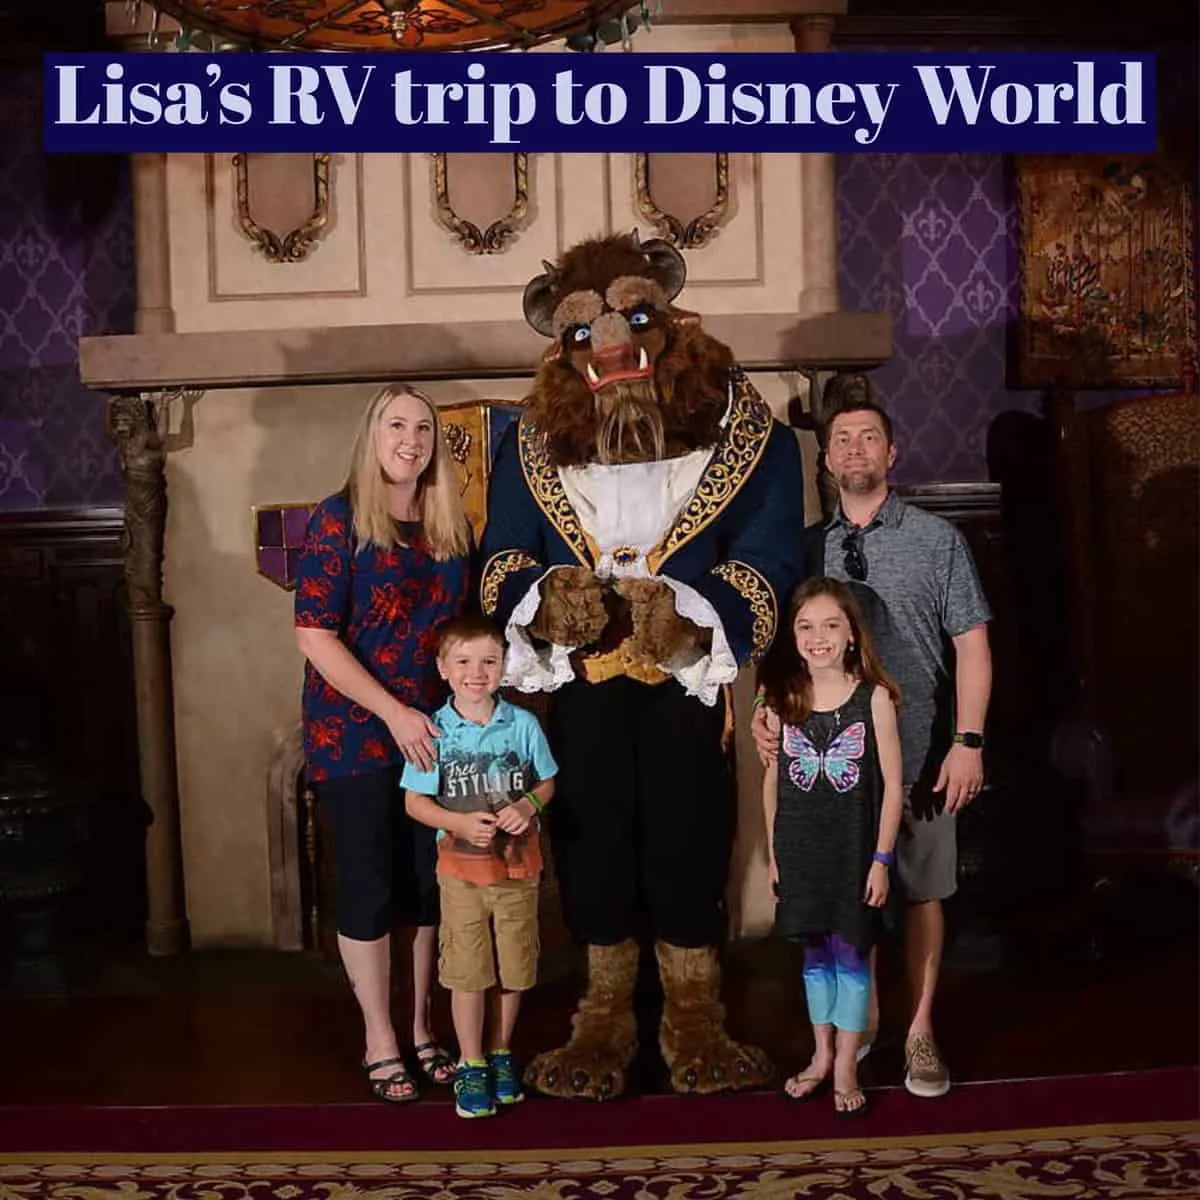 Lisa drove an RV to Disney World – PREP176